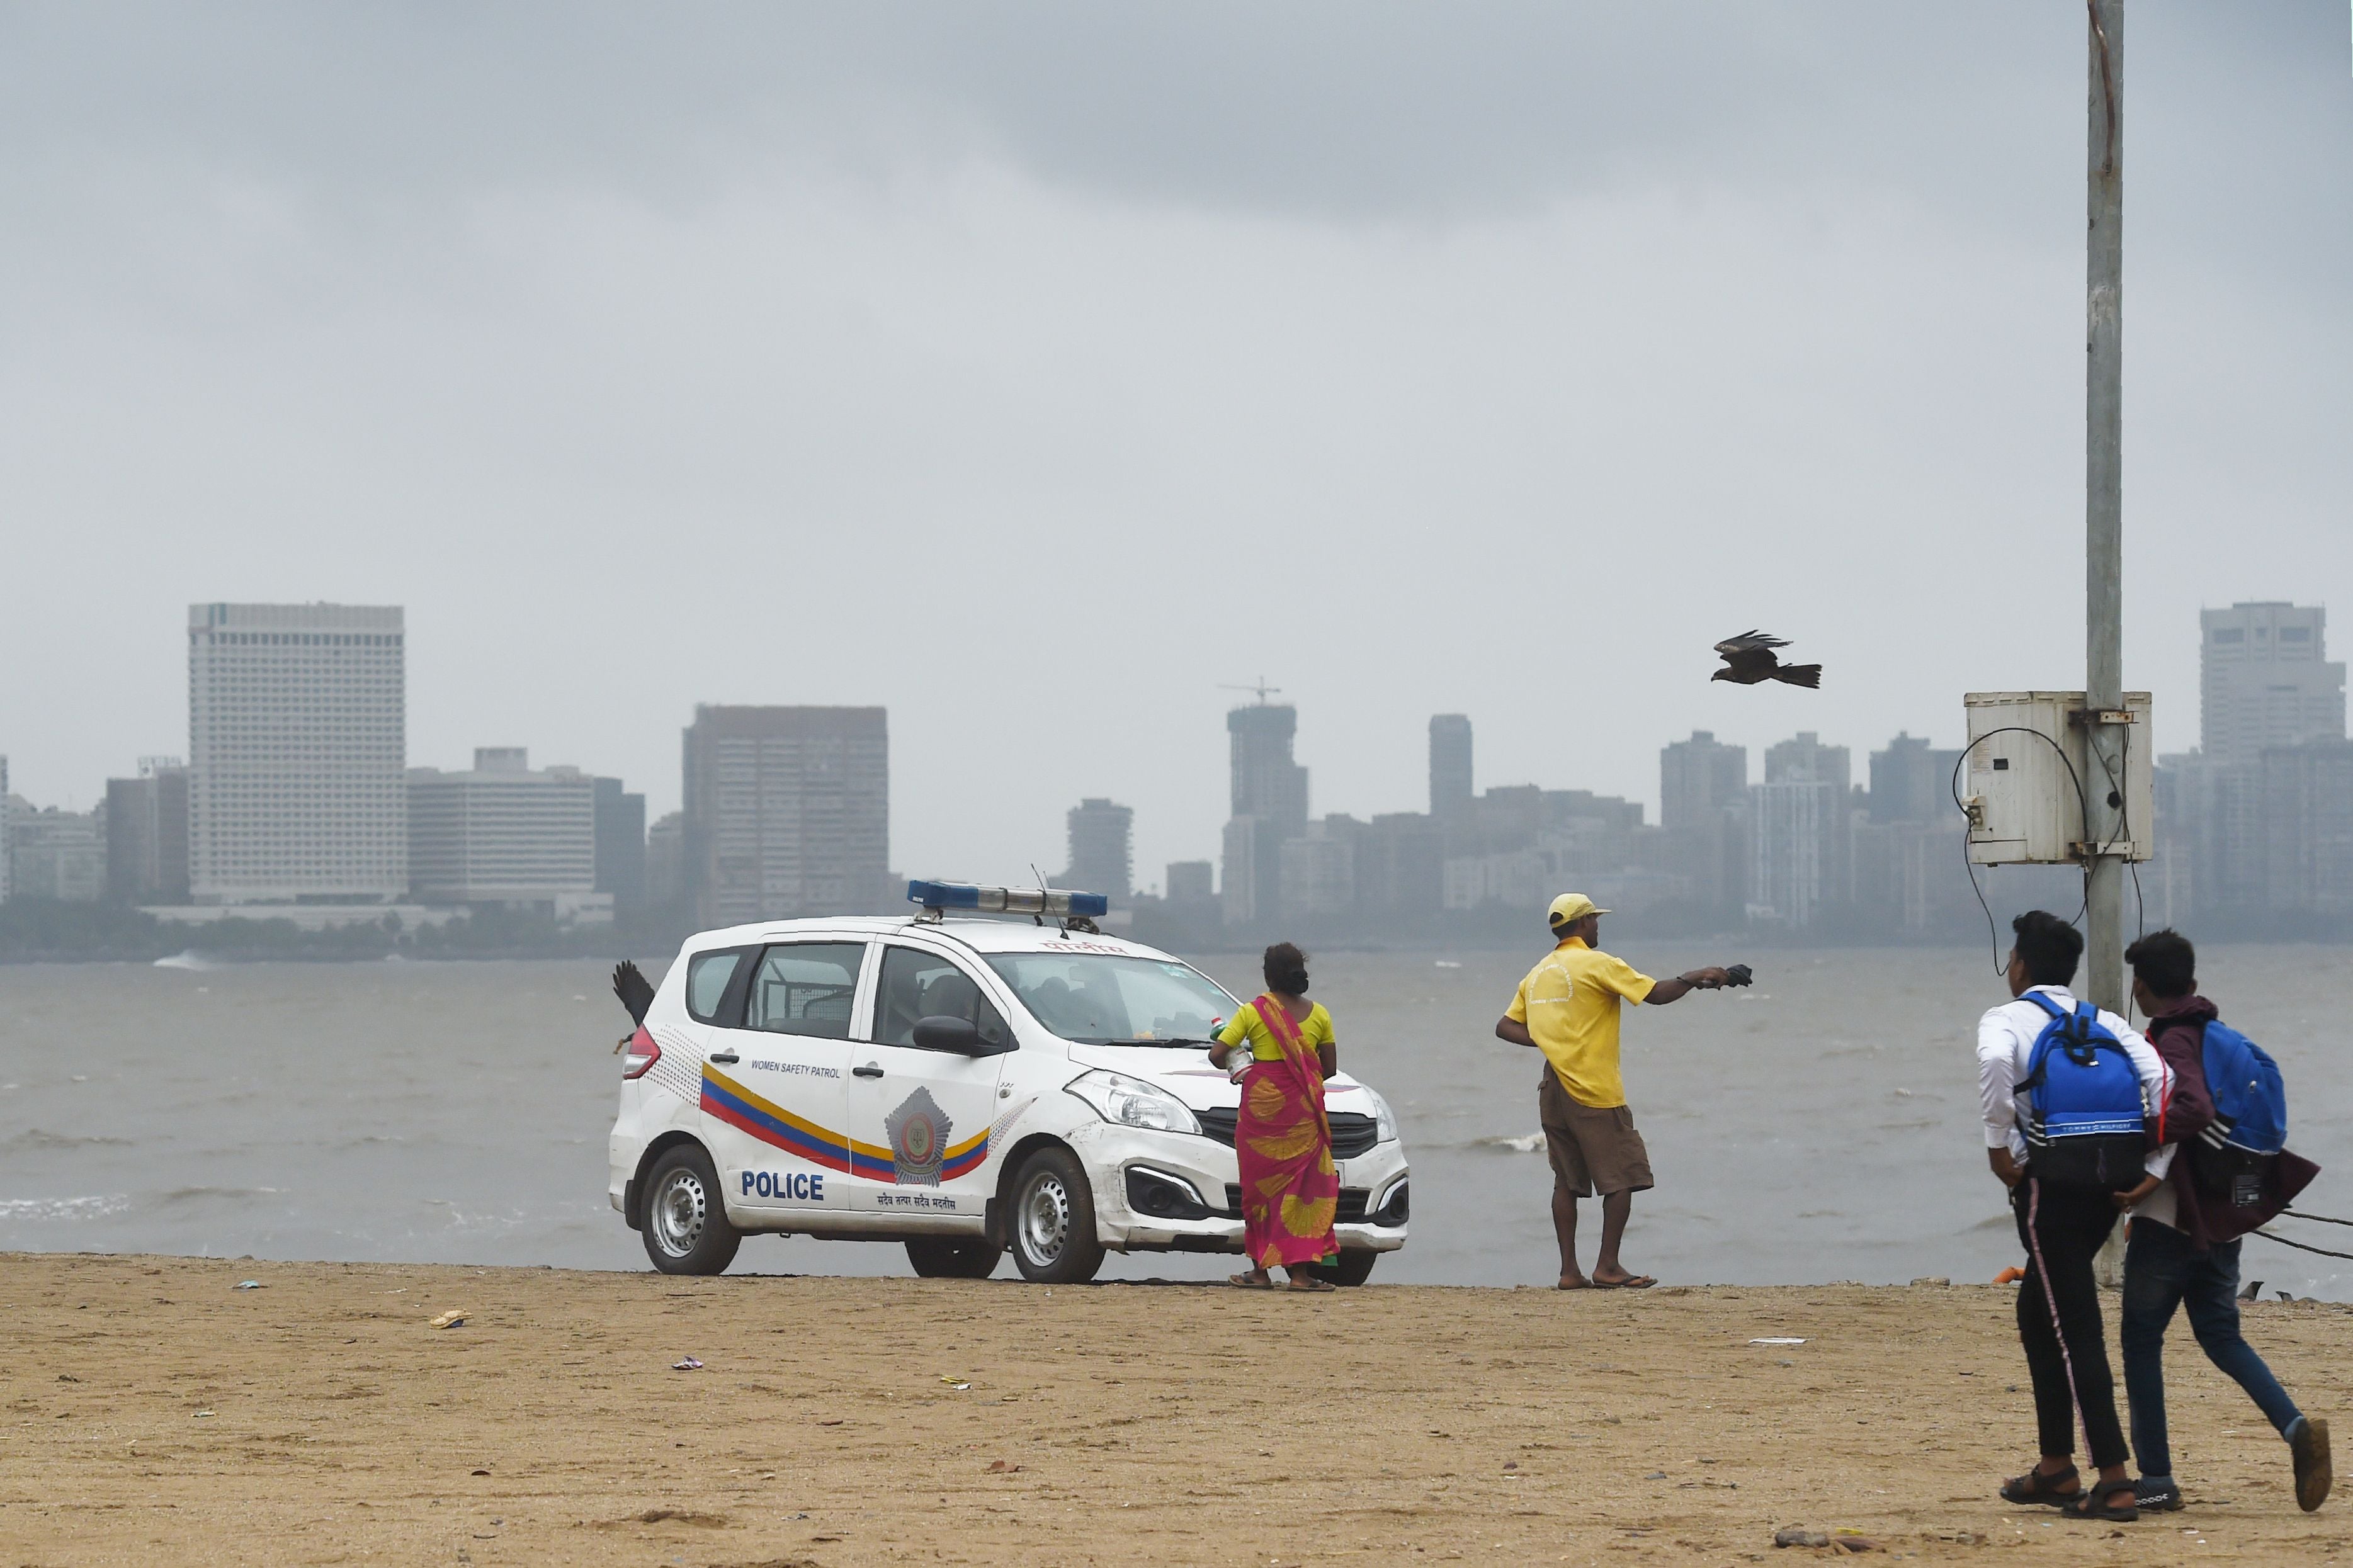 Representational Image. A police vehicle patrols the Girgaum Chowpatty beach in Mumbai